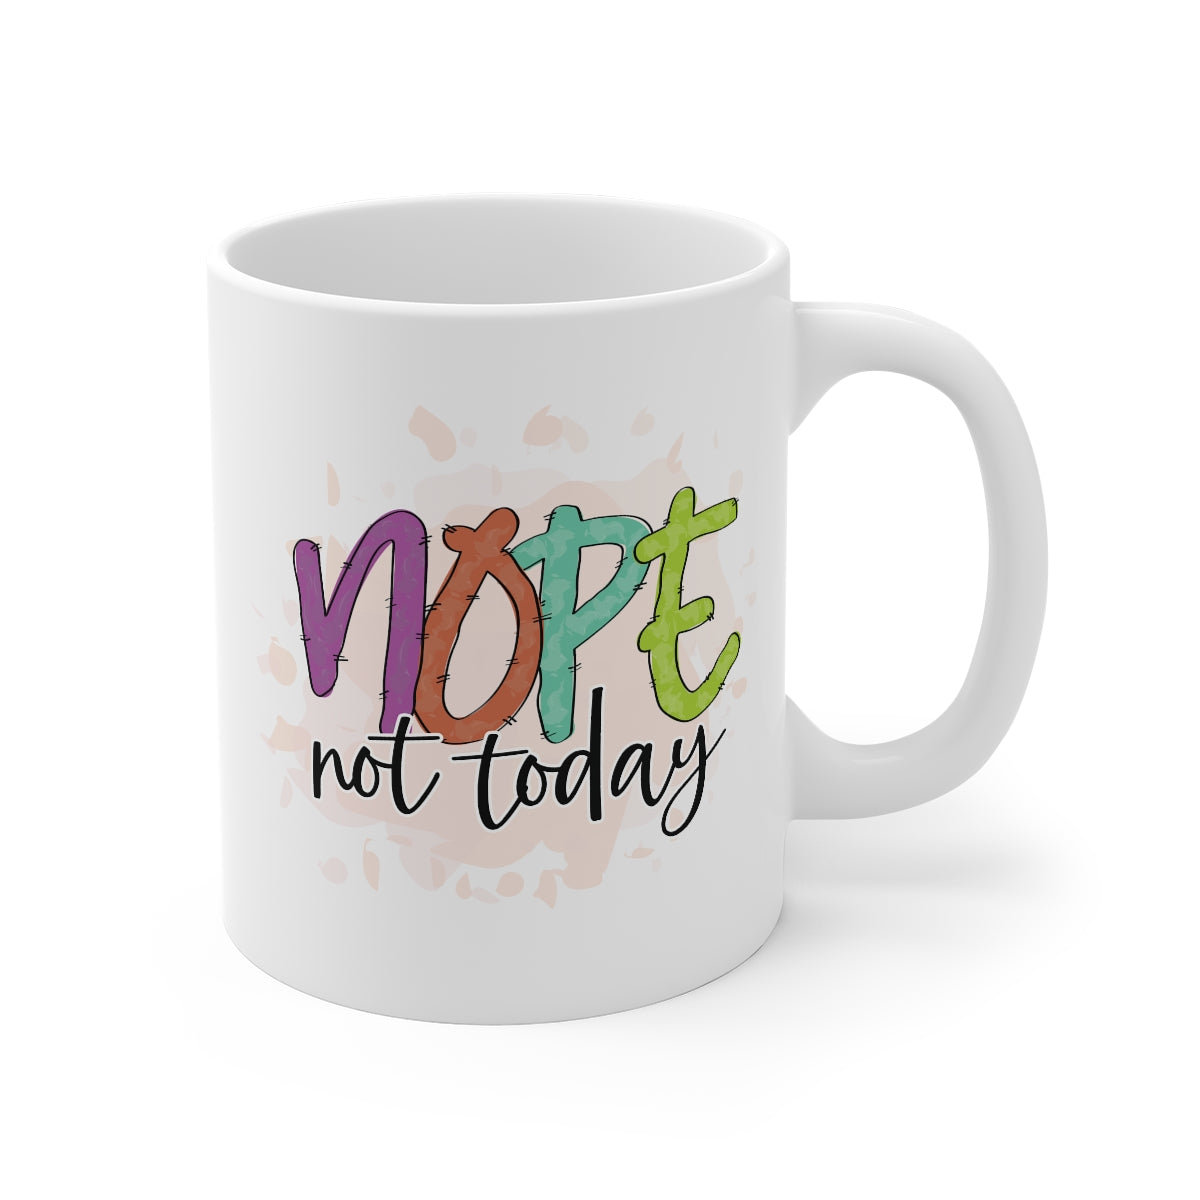 Nope Not today Printed Coffee Mug